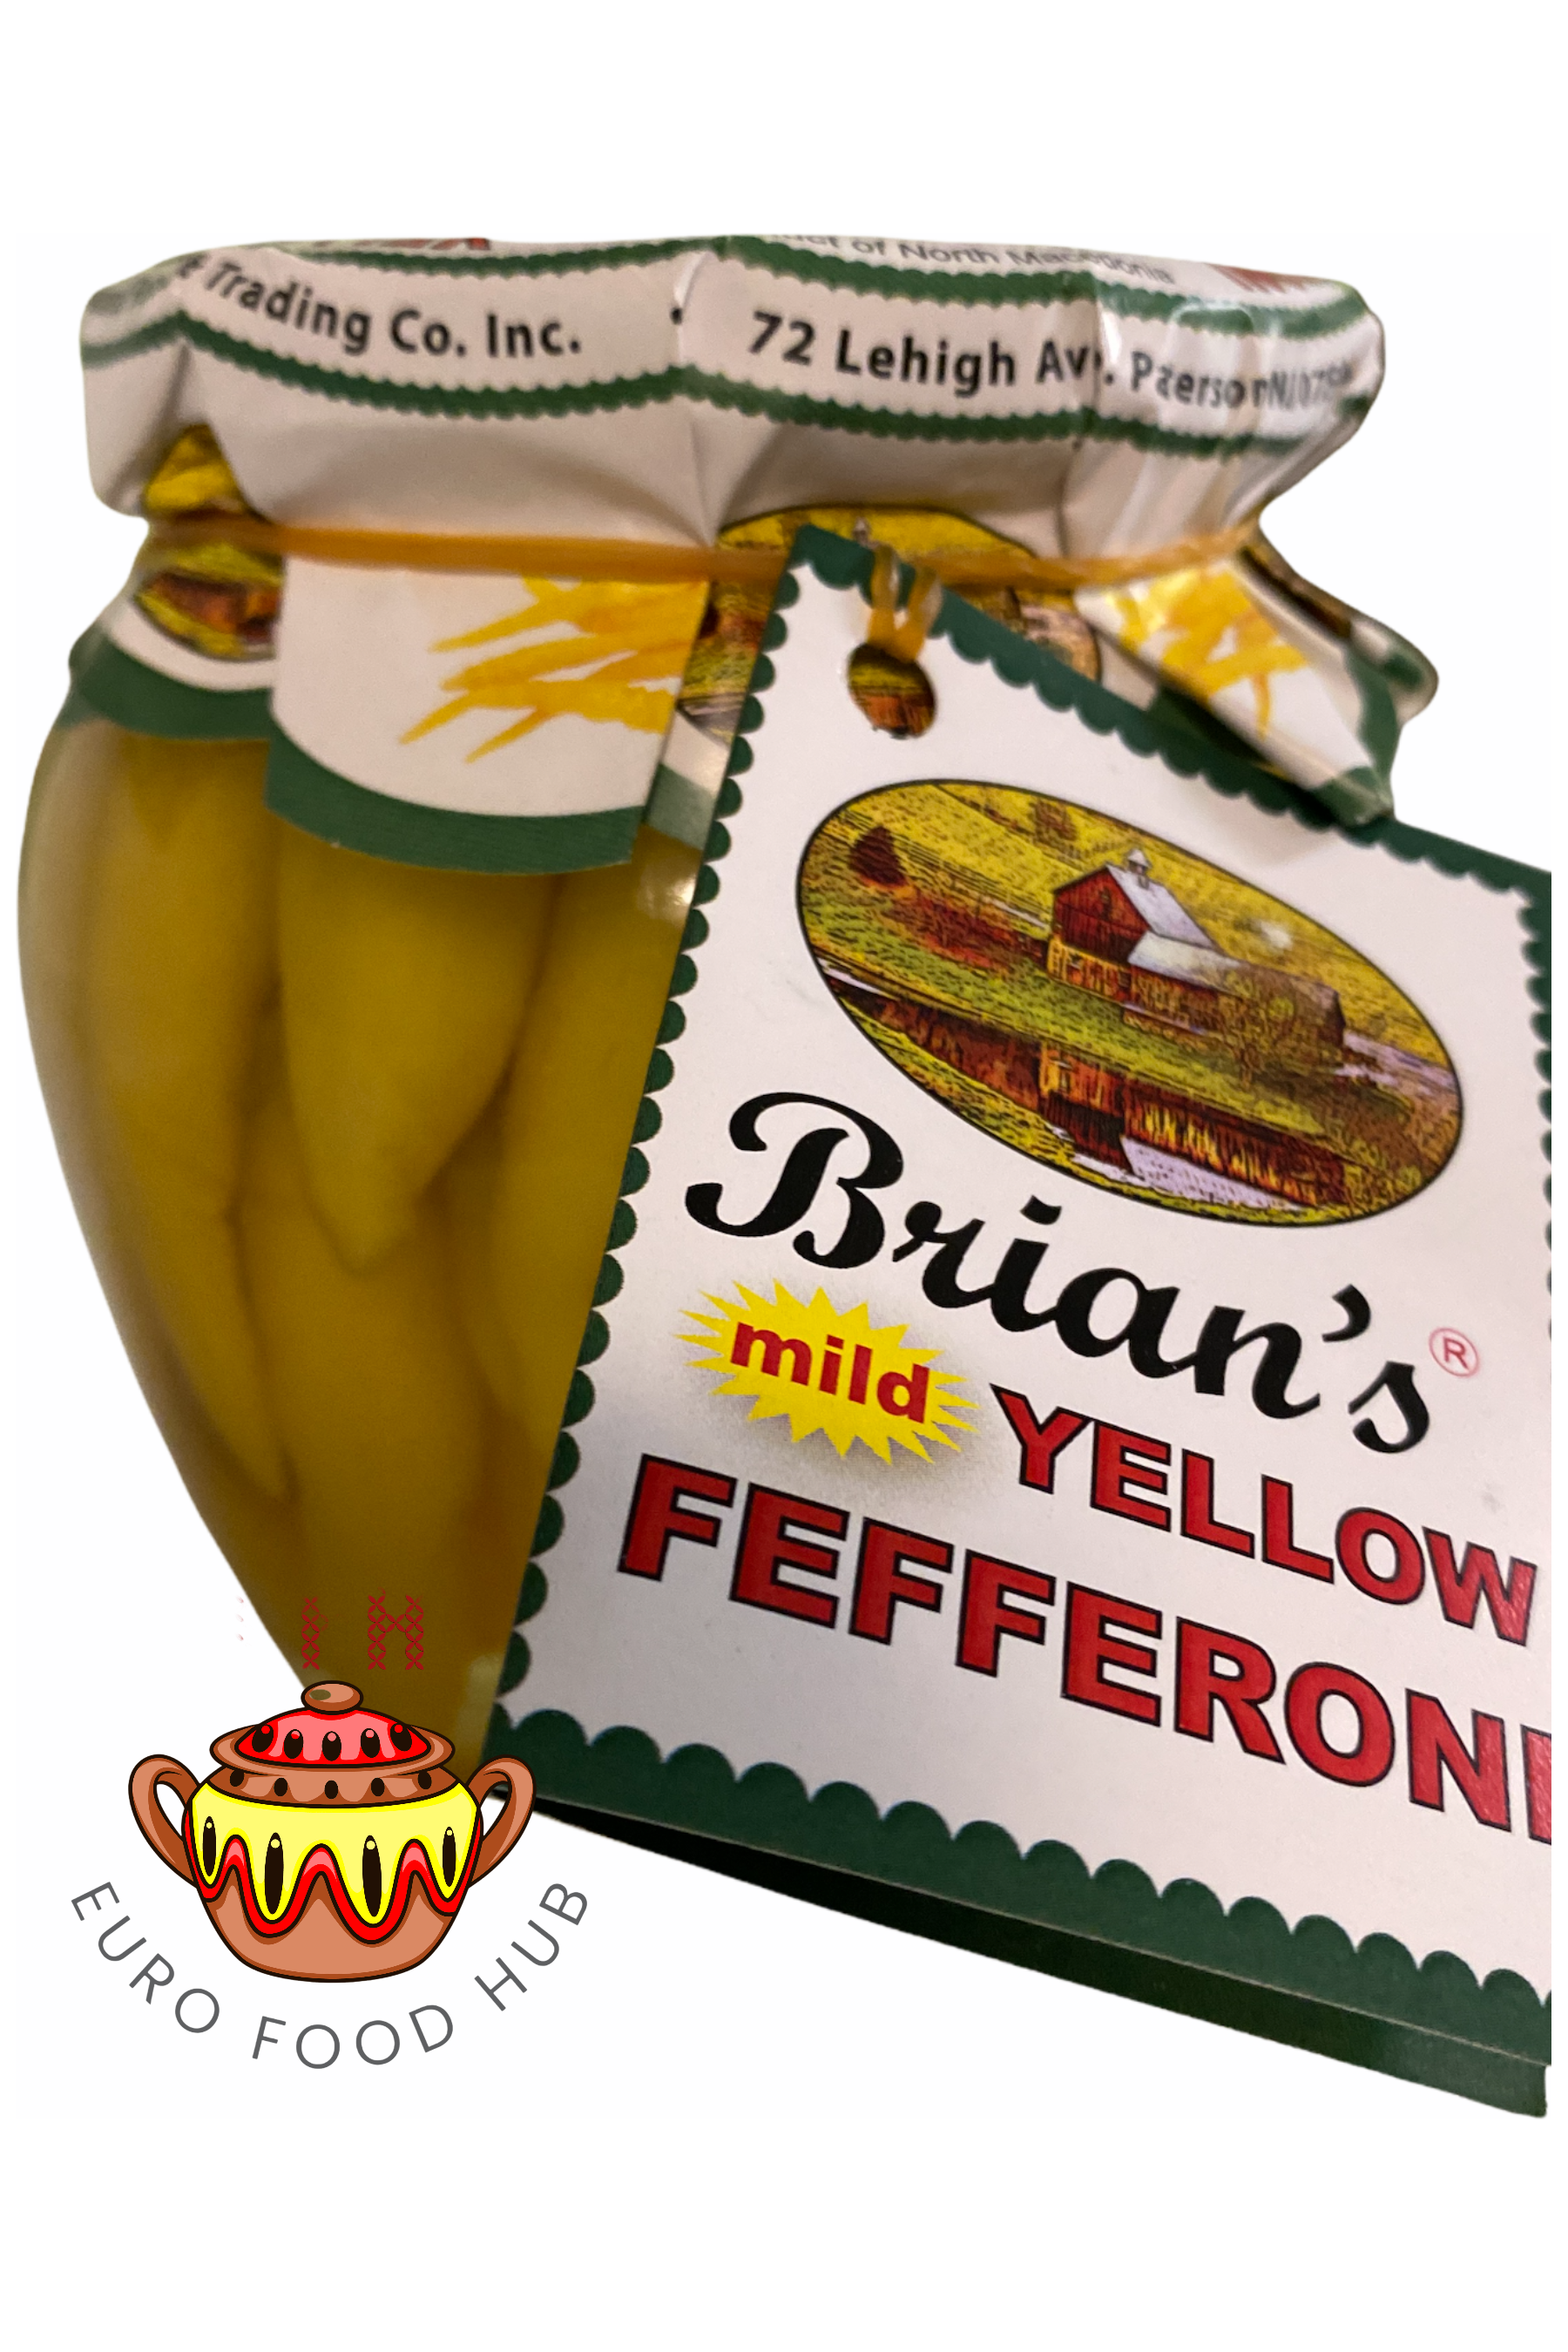 Brian's Yellow Fefferoni - Mild or Hot